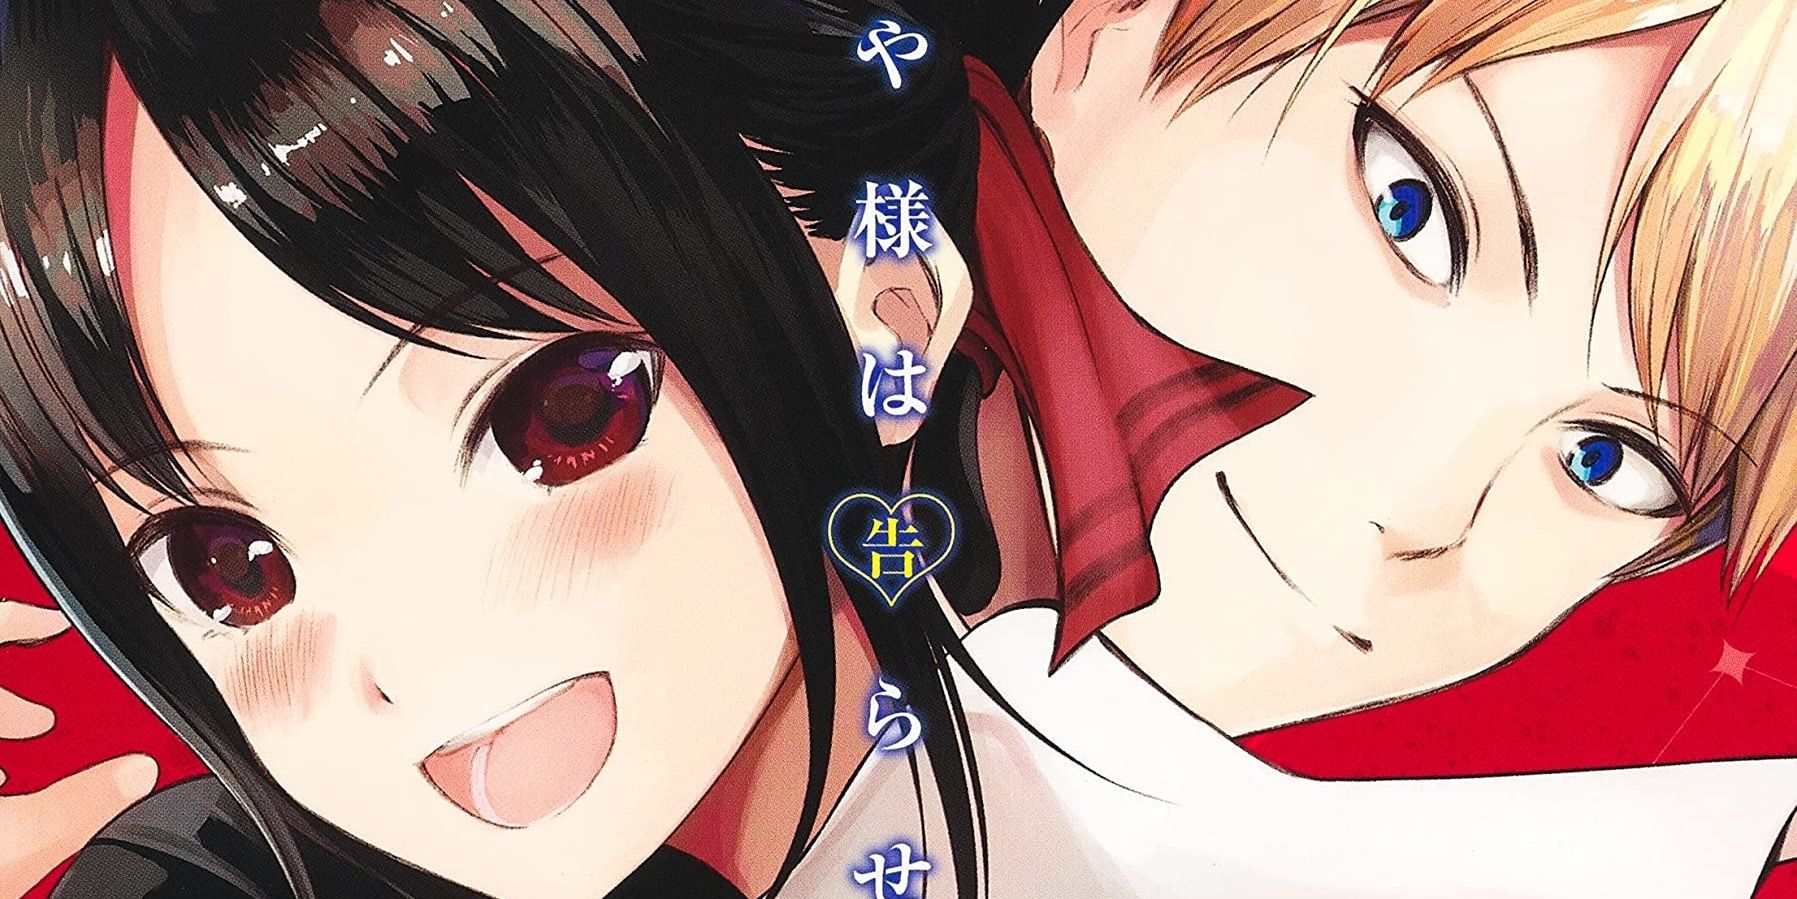 Kaguya and Miyuki on the cover of Kaguya-Sama: Love Is War's manga.